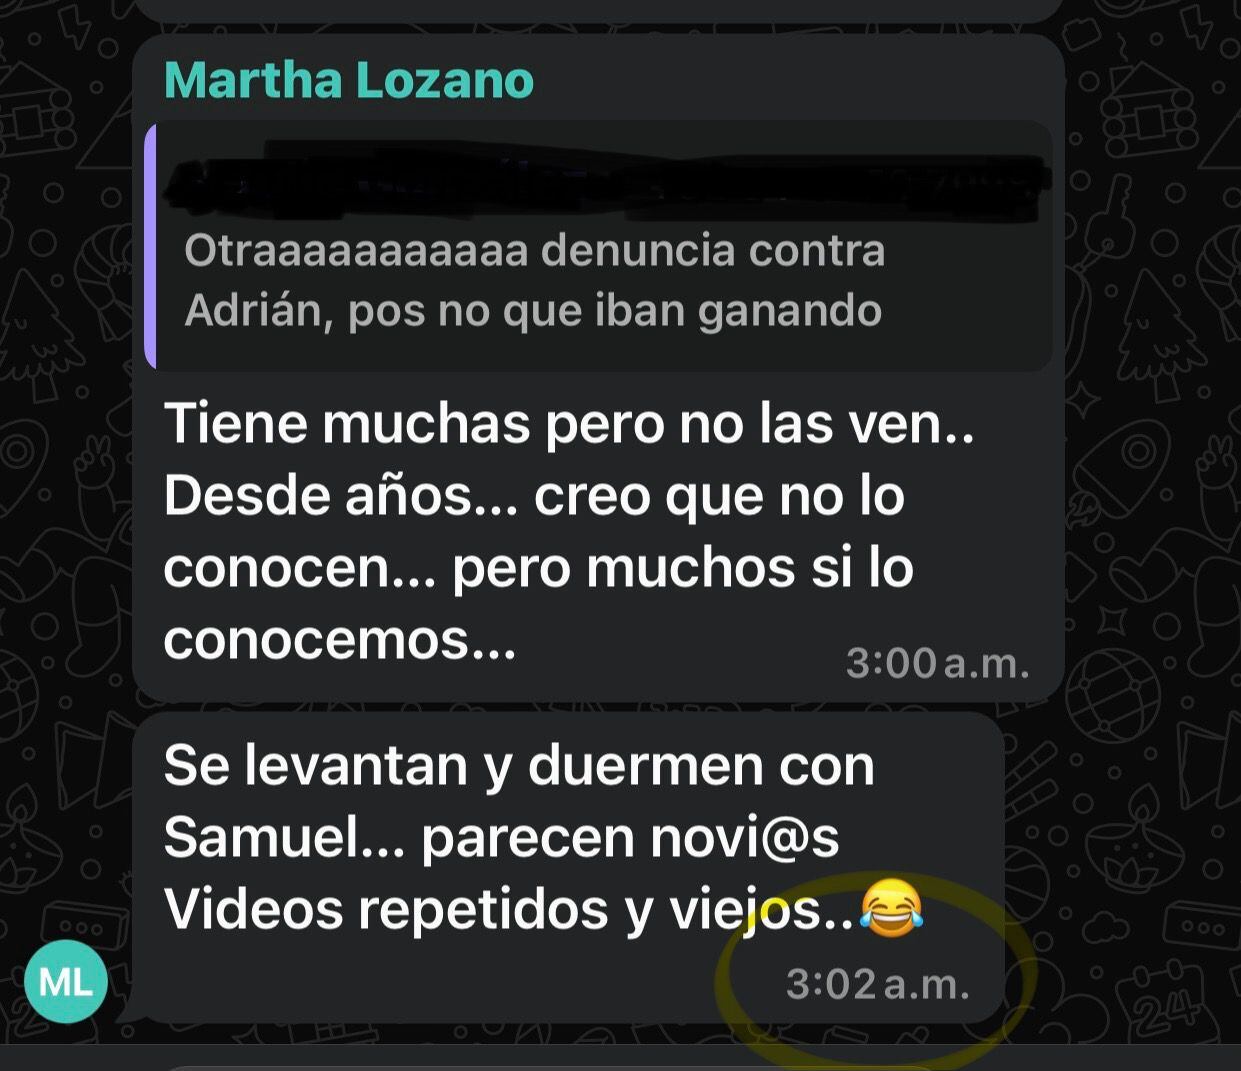 Mensajes de Martha Lozano durante la madrugada